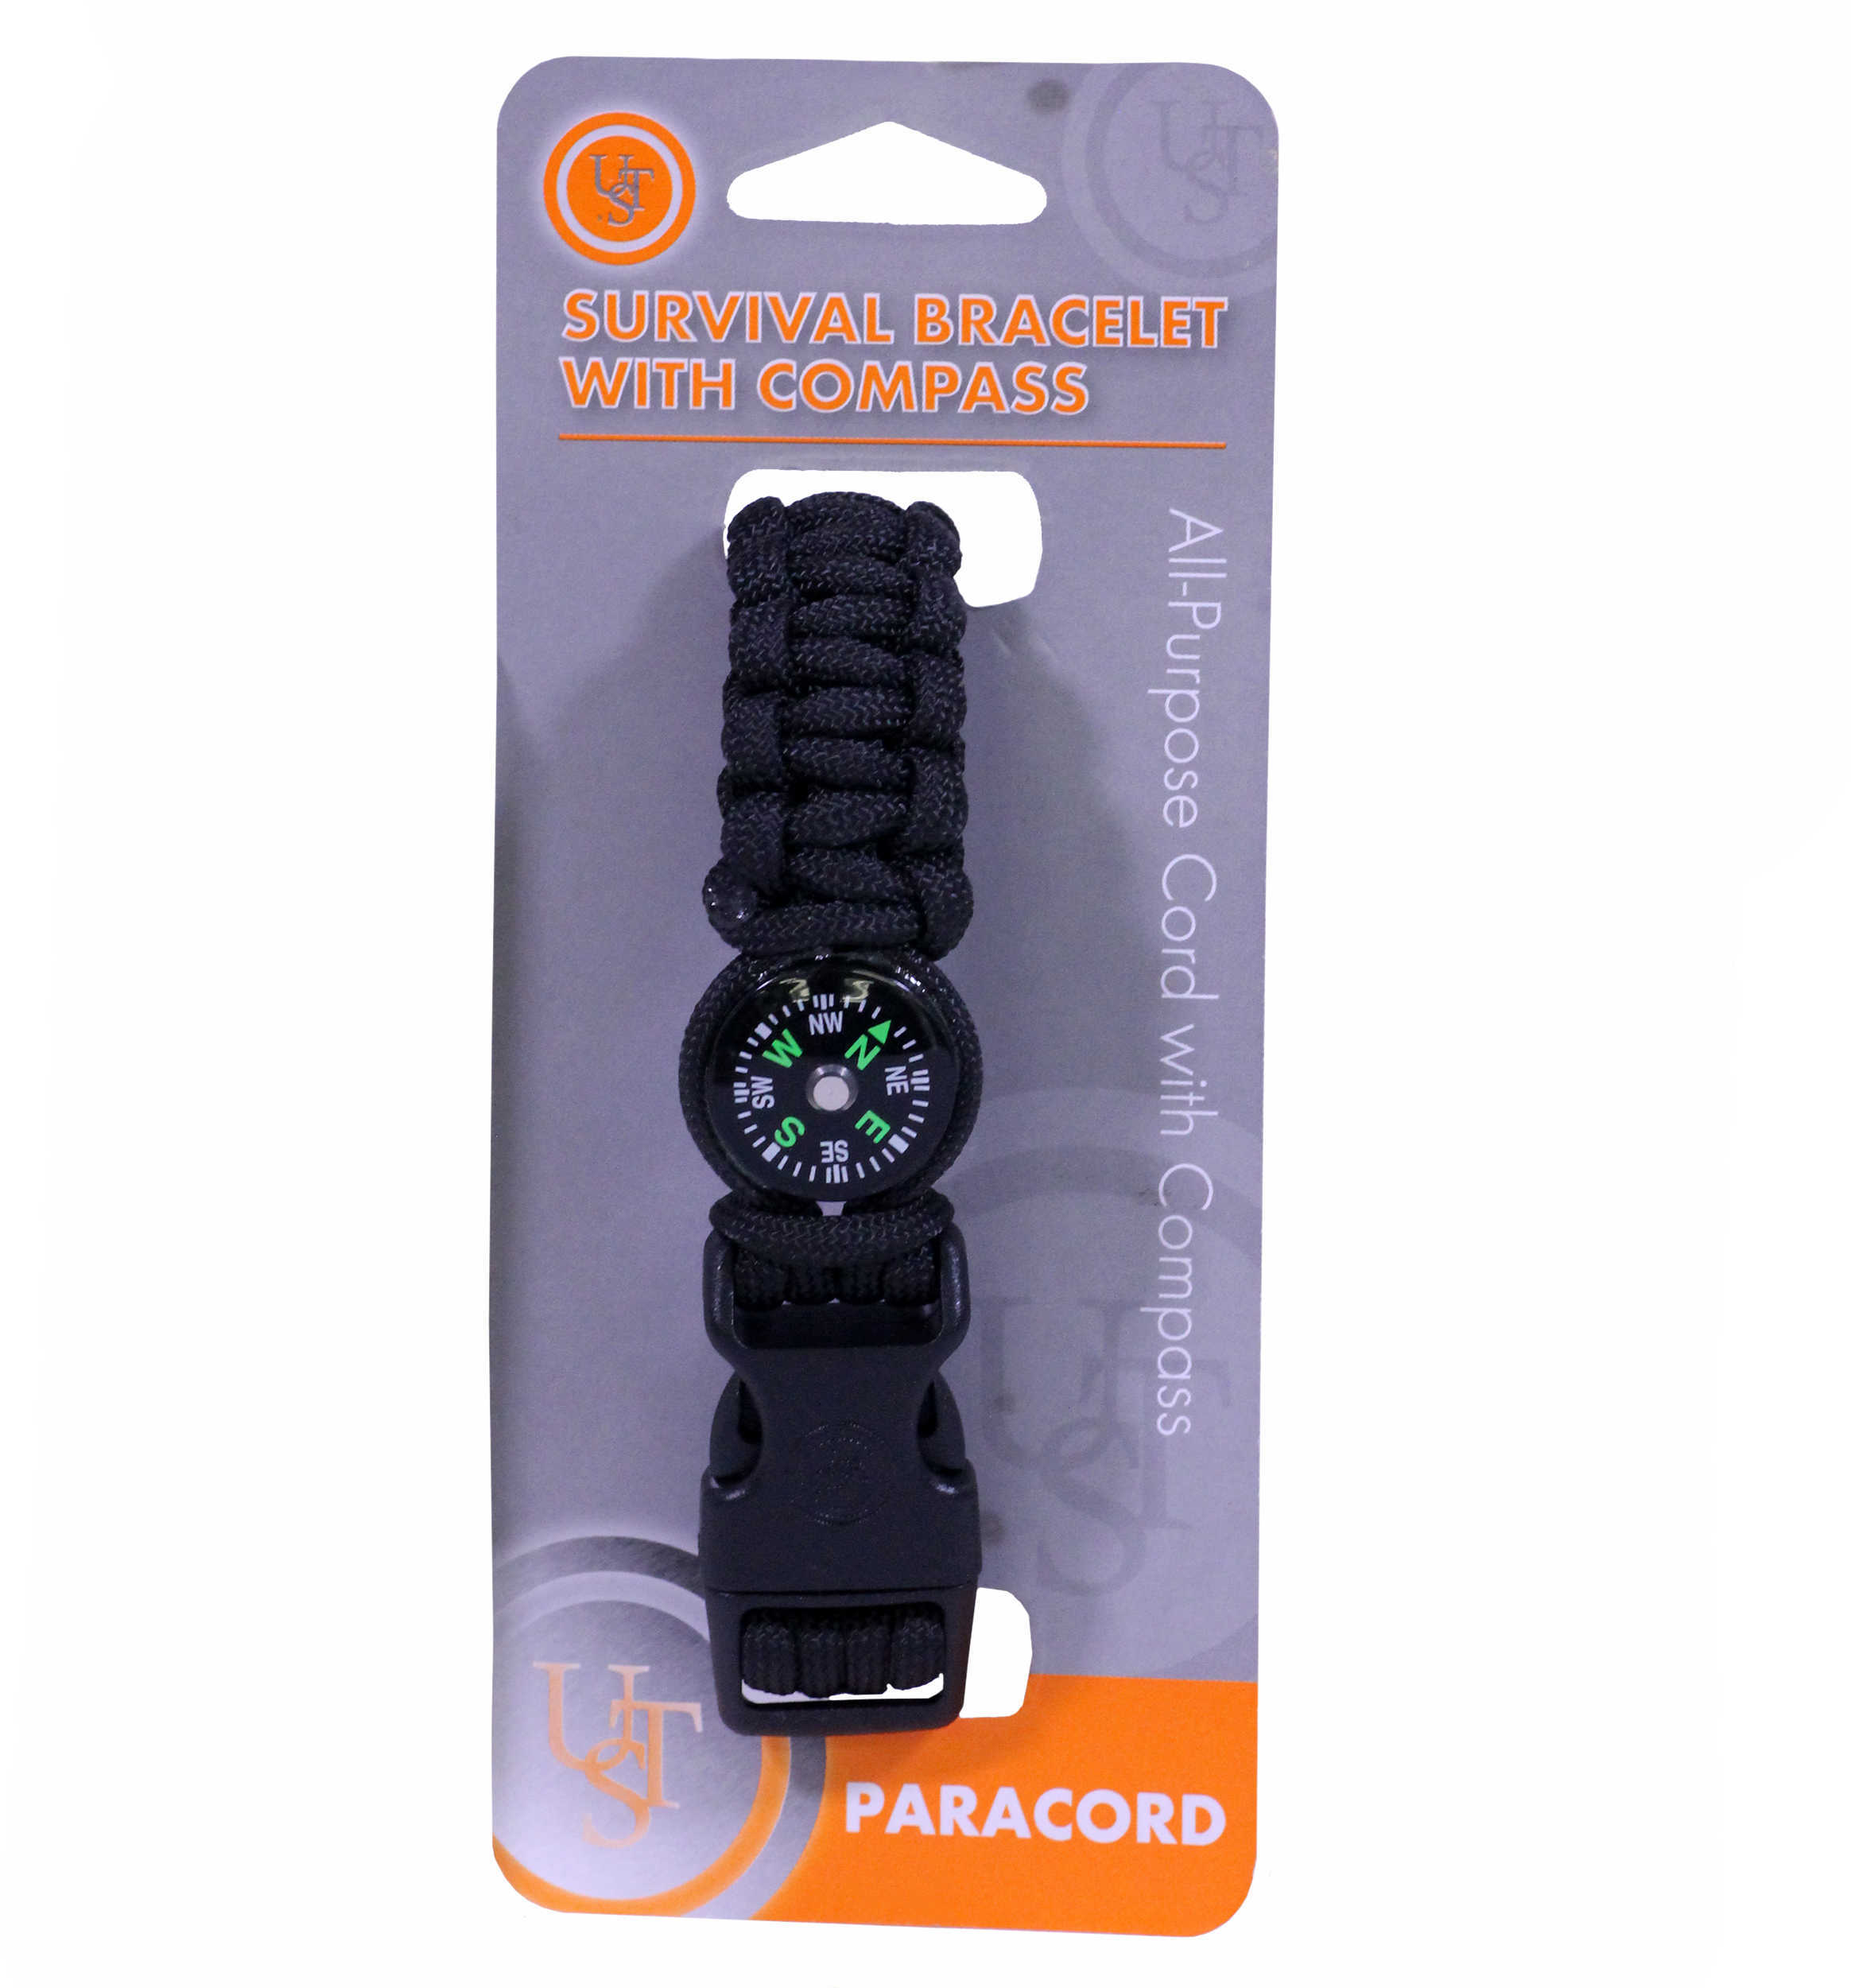 Survival Bracelet With Compass UST - Ultimate Technologies 20-295-345-E5 Black